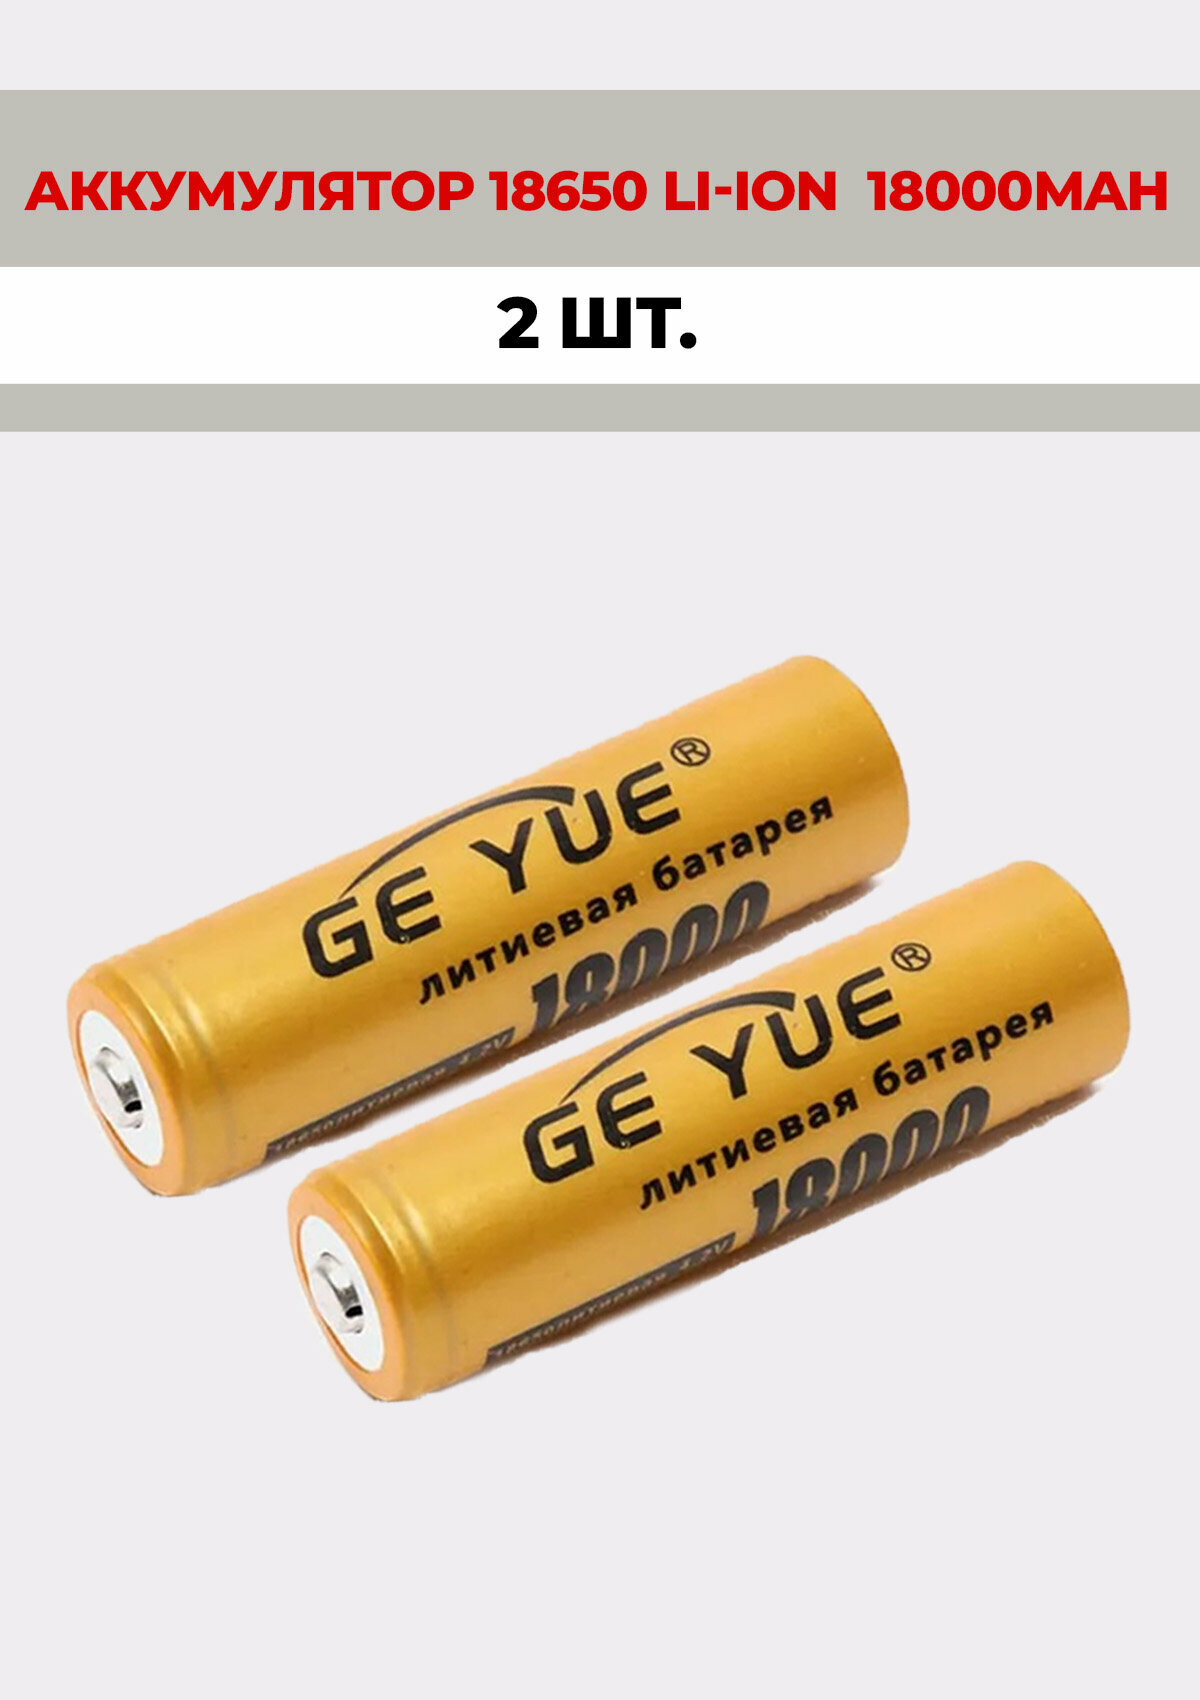 2 шт. Аккумуляторная батарейка GE_YUE 18650 литий-ионный 4,2V /18000mAh